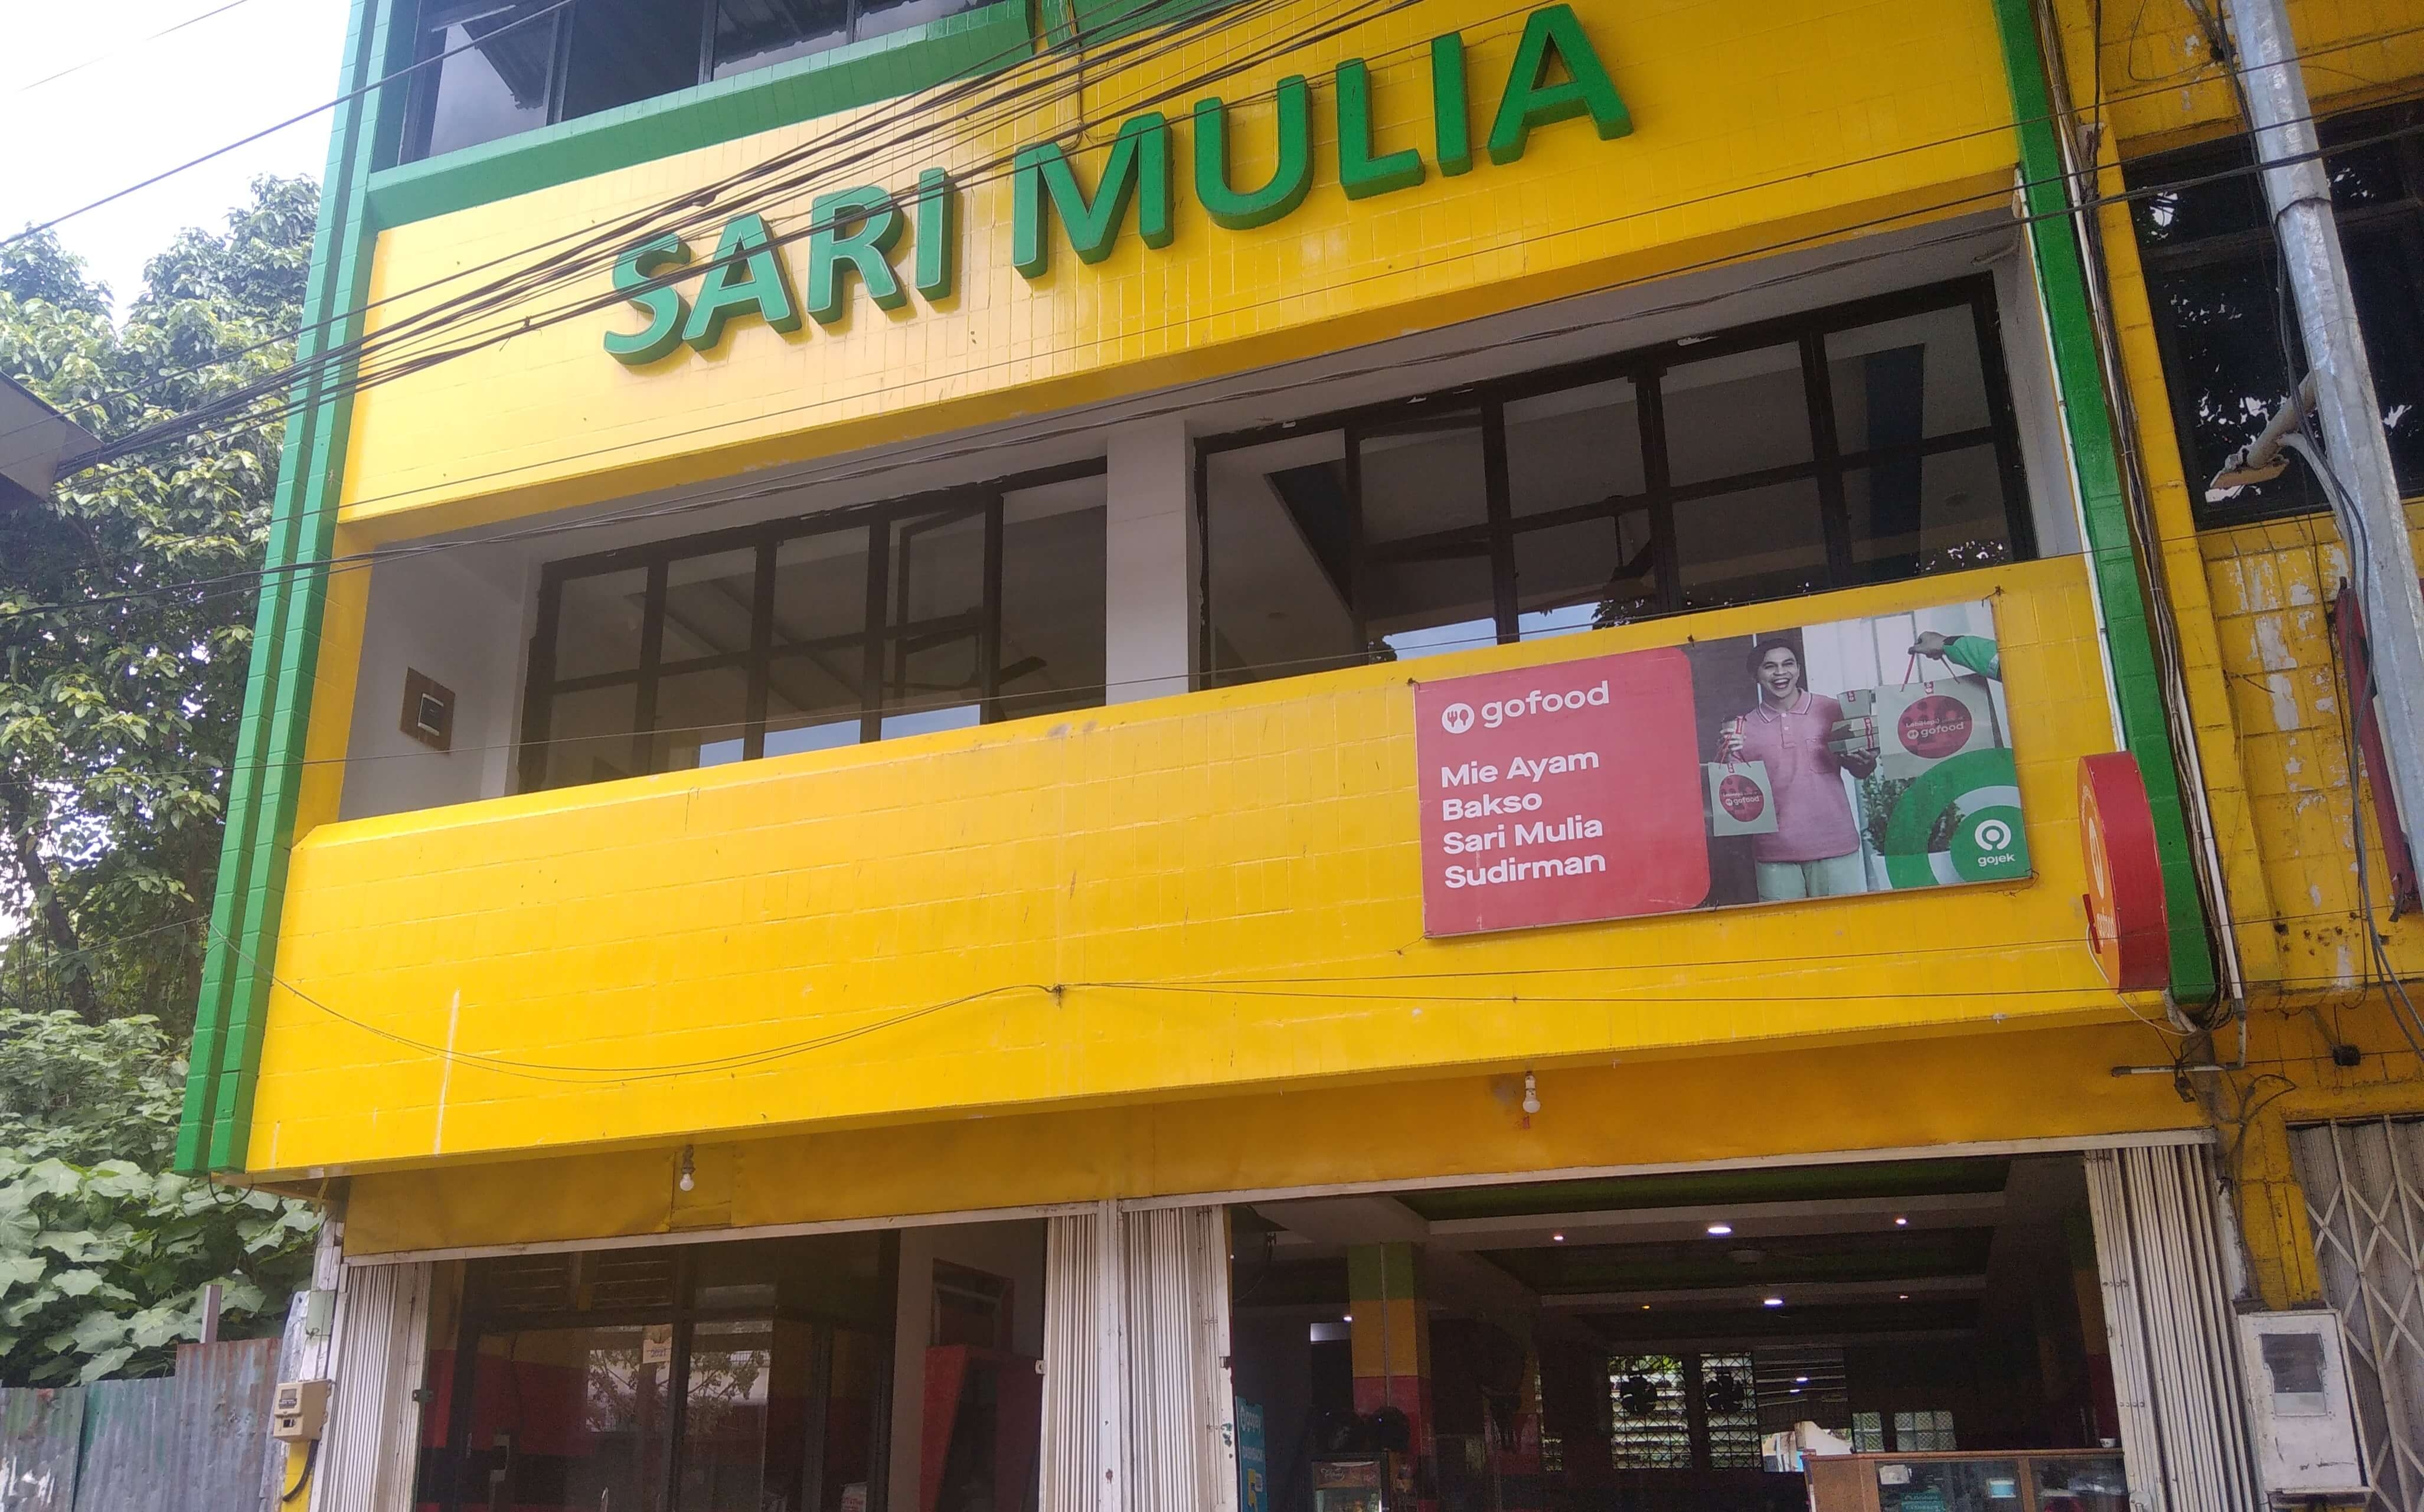 Sari Mulia, Kedai Mie Ayam Legendaris di Palembang, Berdiri Sejak Tahun 1982